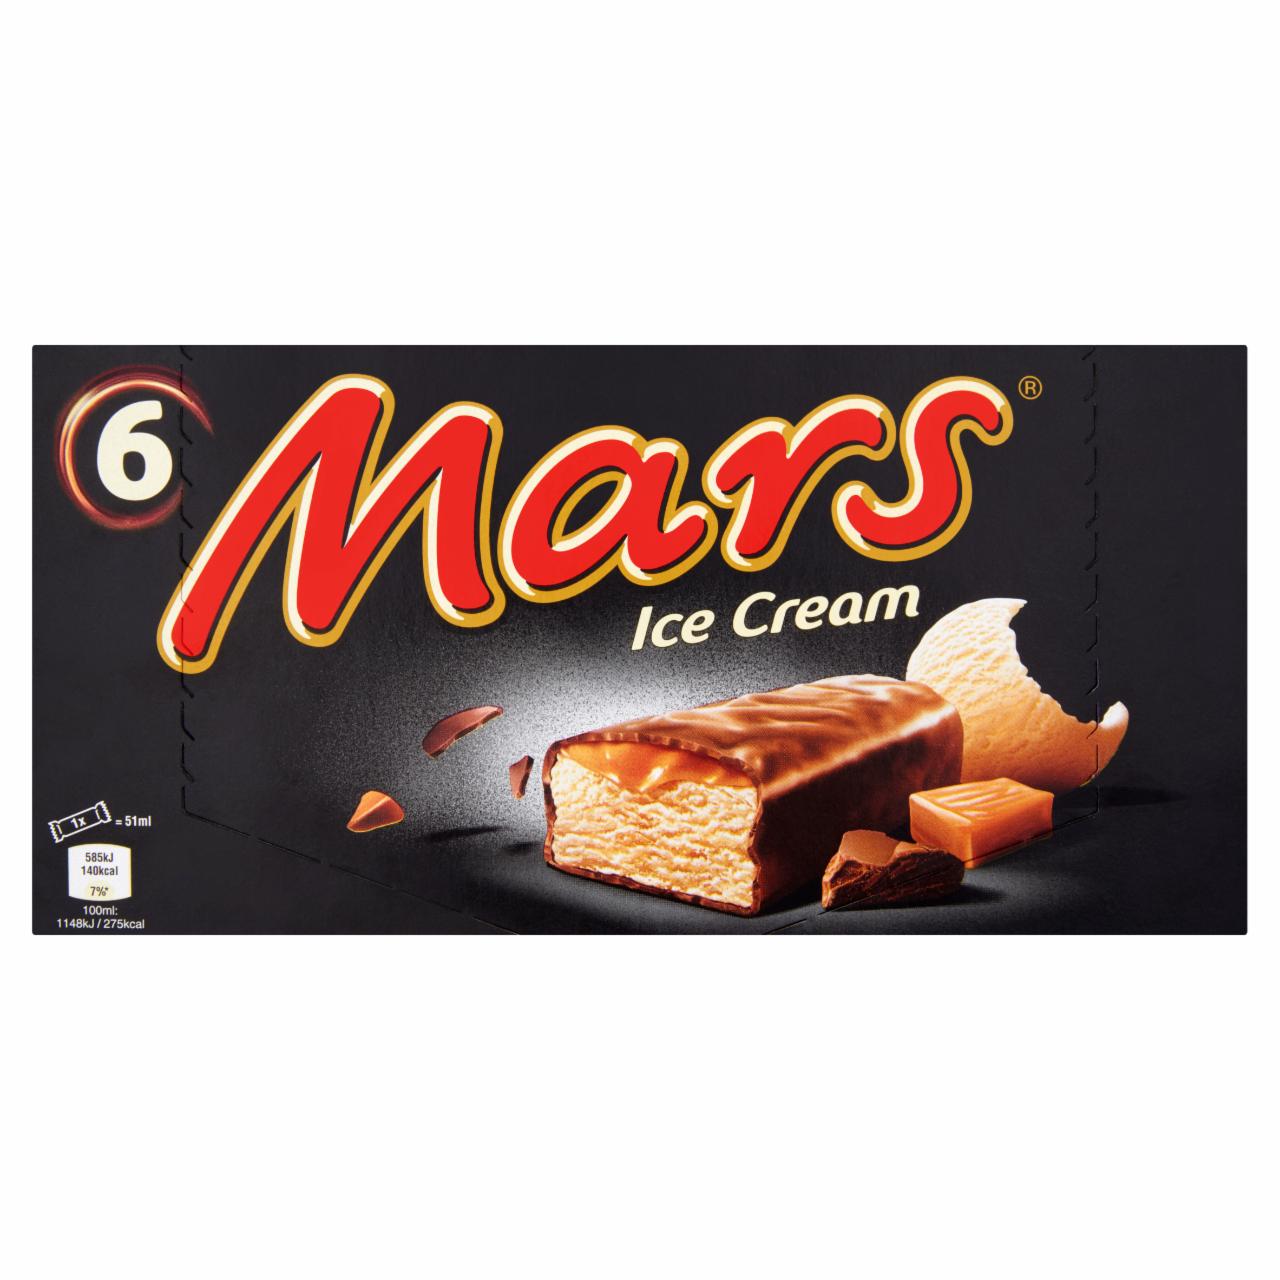 Képek - Mars jégkrém 6-pack 250,8 g